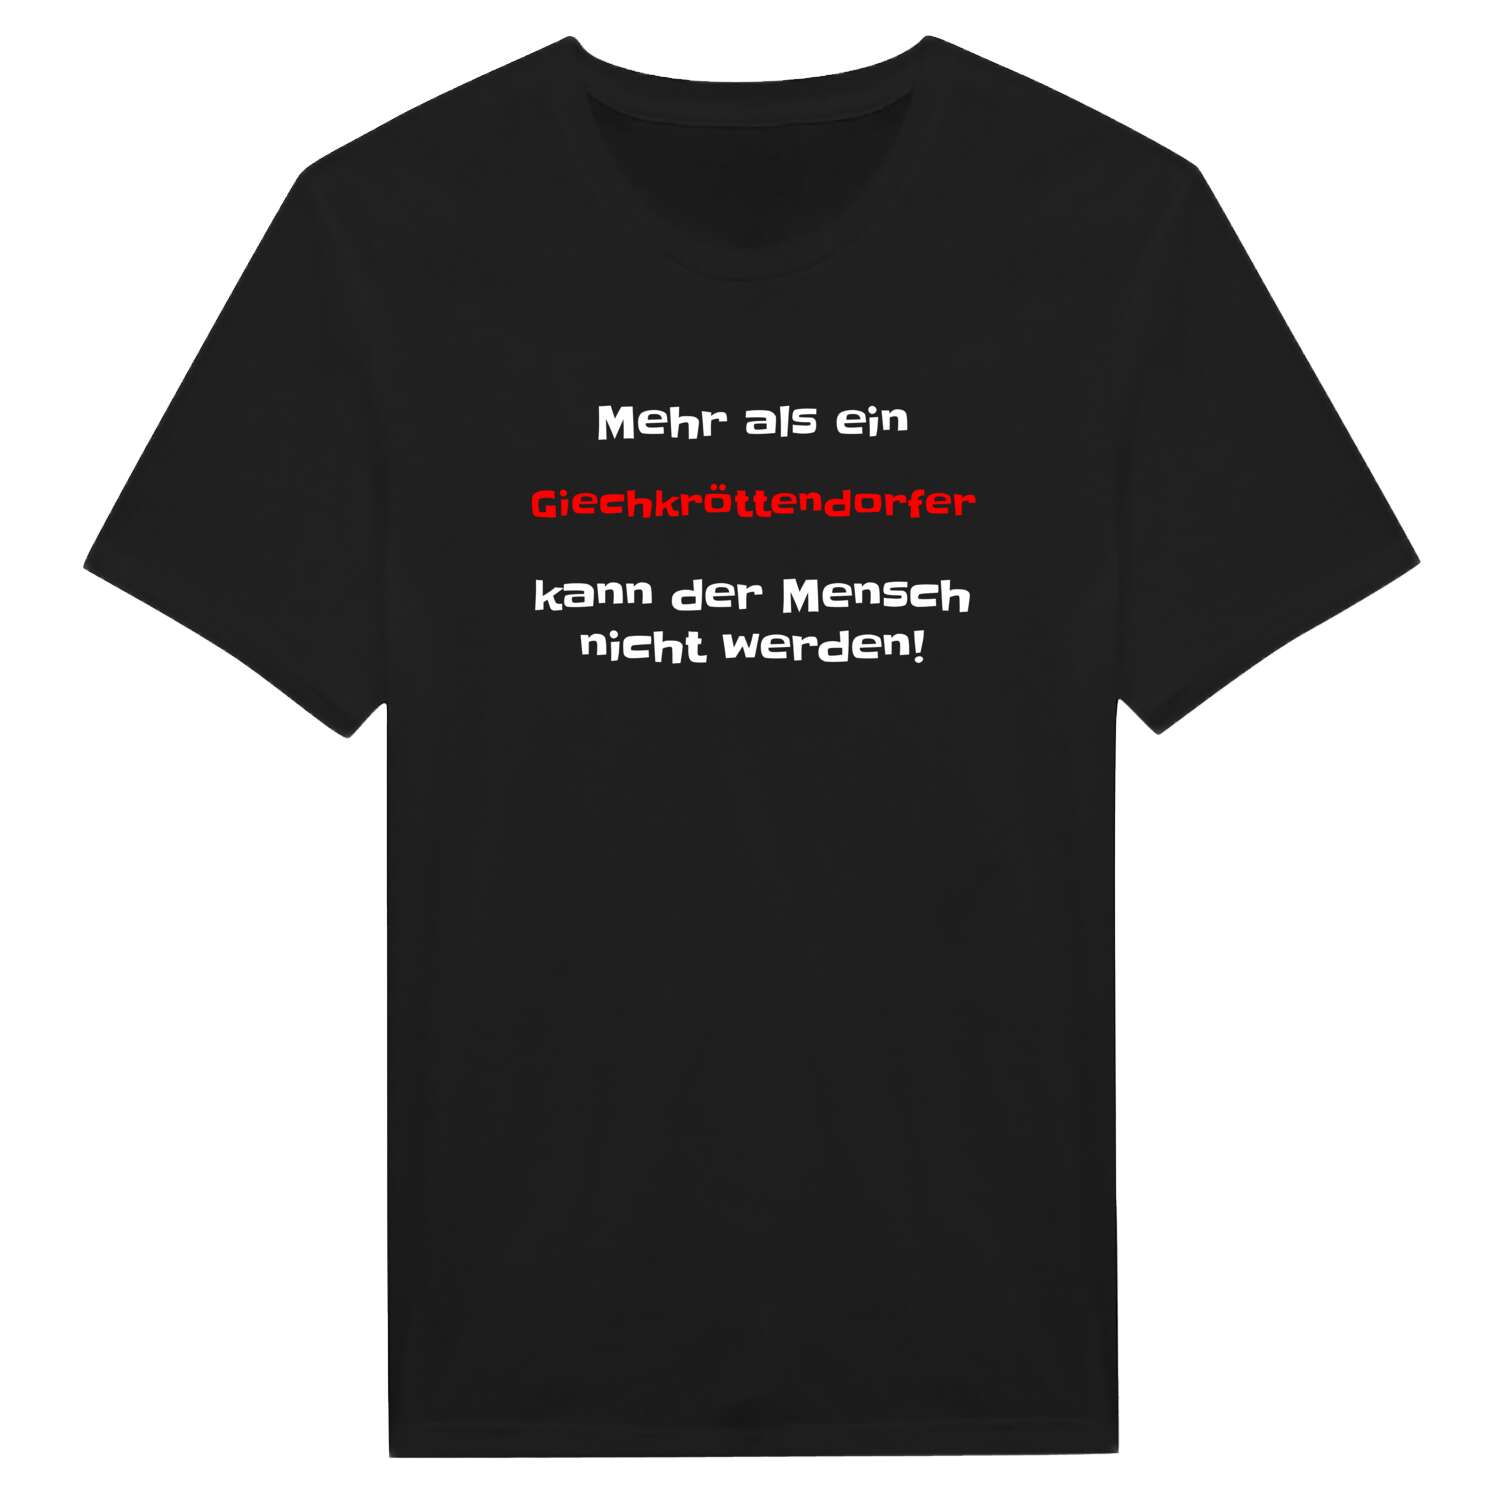 Giechkröttendorf T-Shirt »Mehr als ein«